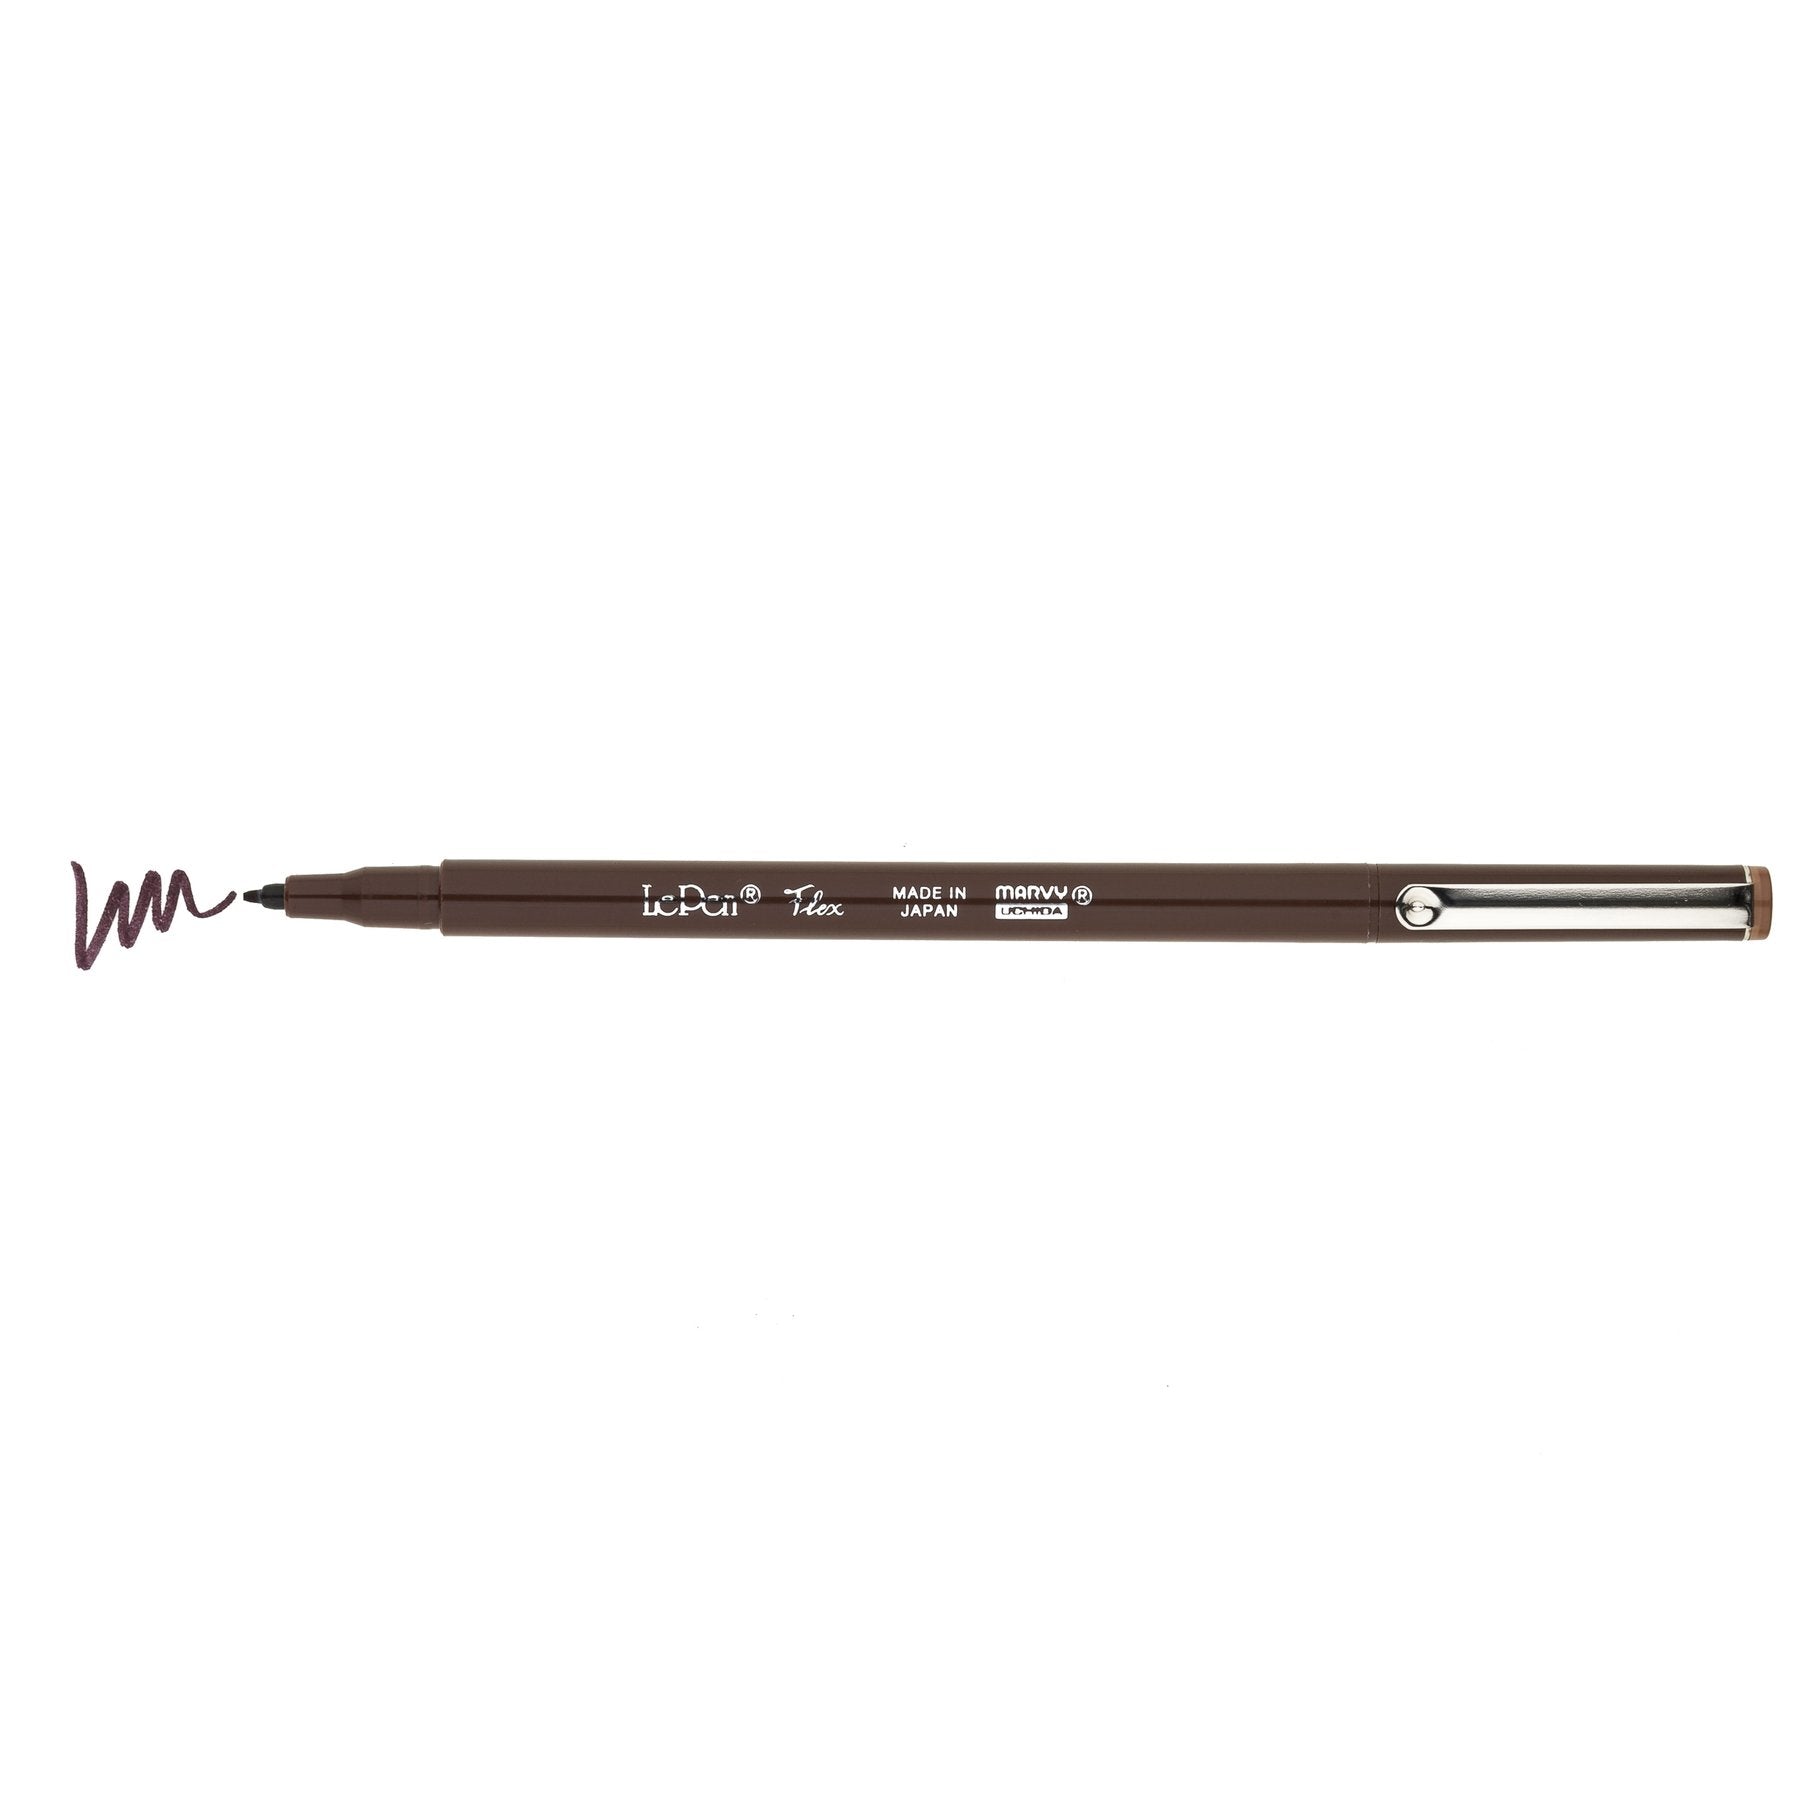 Marvy Uchida - Brush Pen - Le Pen Flex - Brown #6